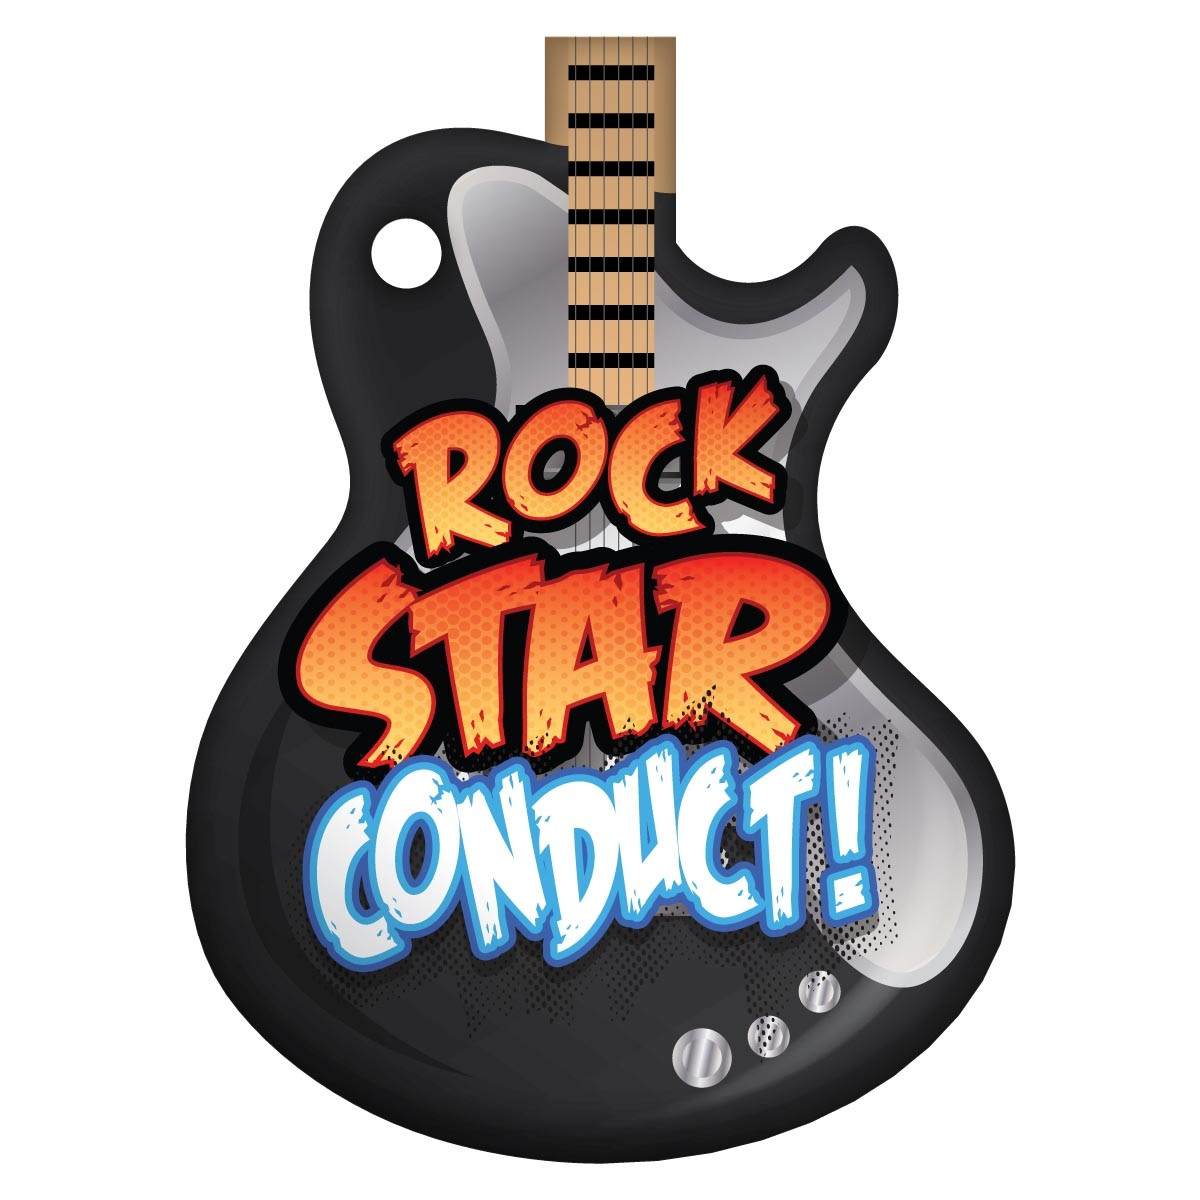 Guitar Brag Tags - Rock Star Conduct!